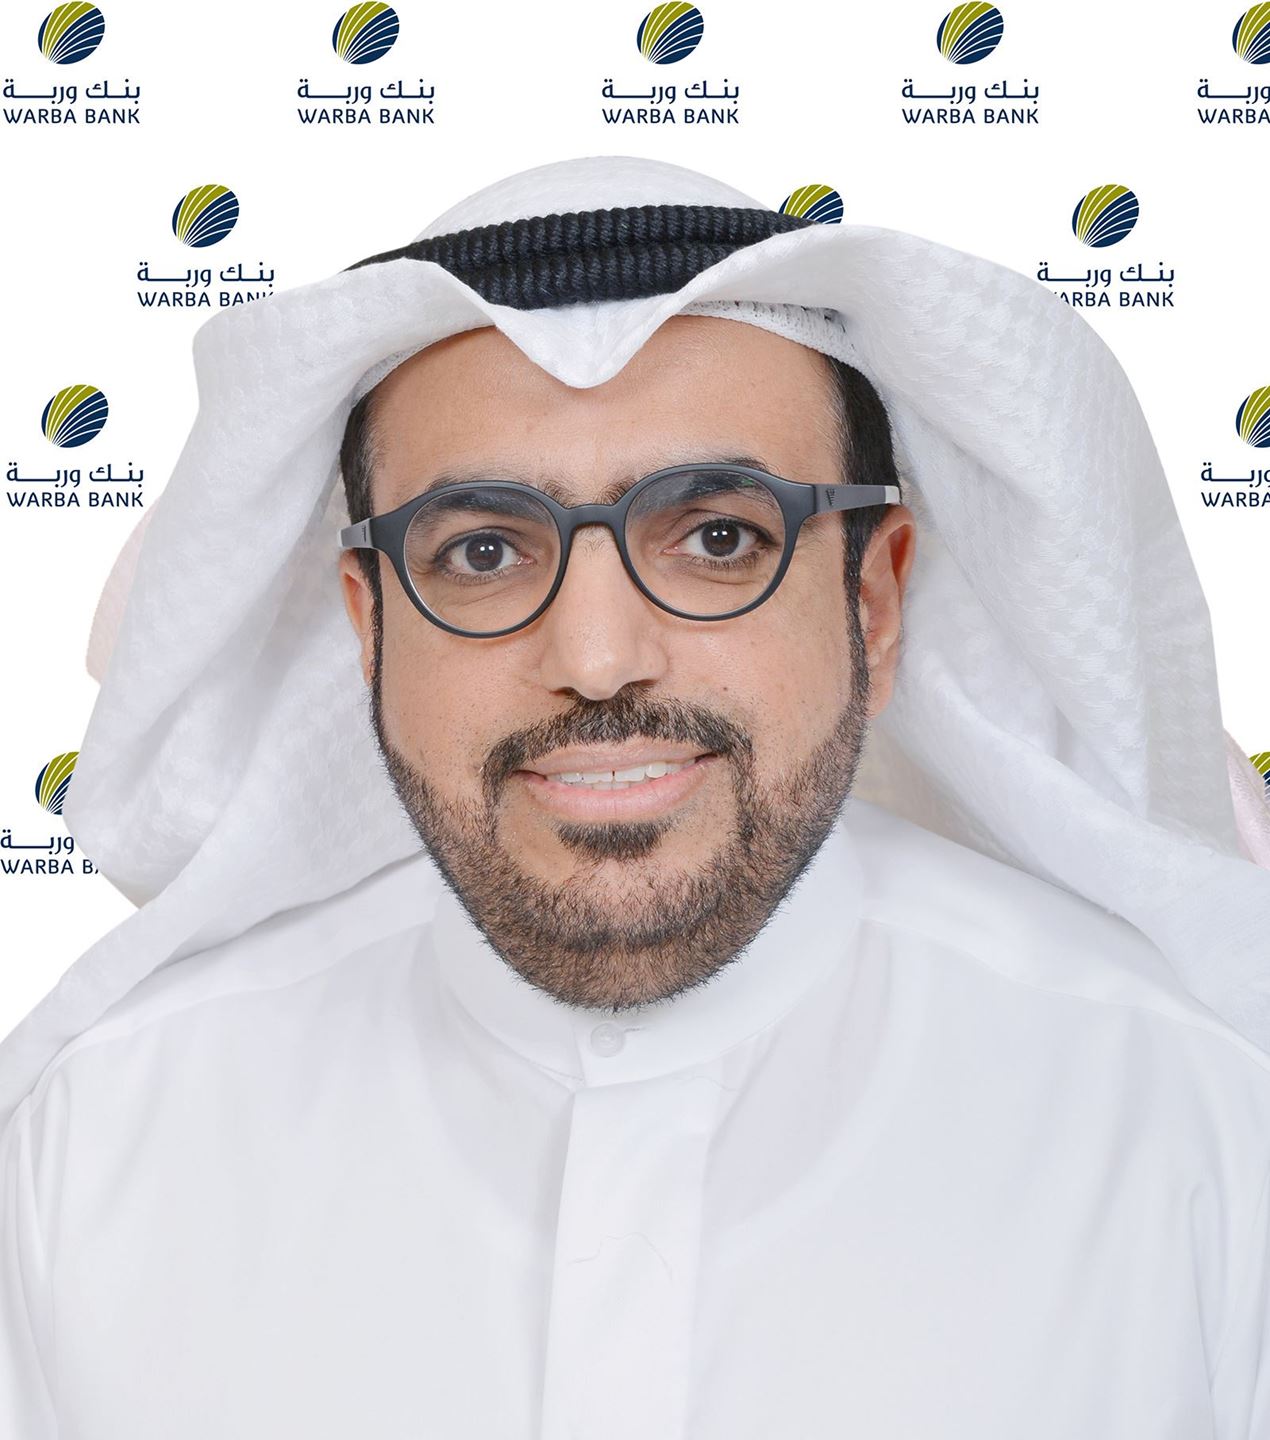 Shaheen Hamed Al Ghanem, Warba Bank’s CEO